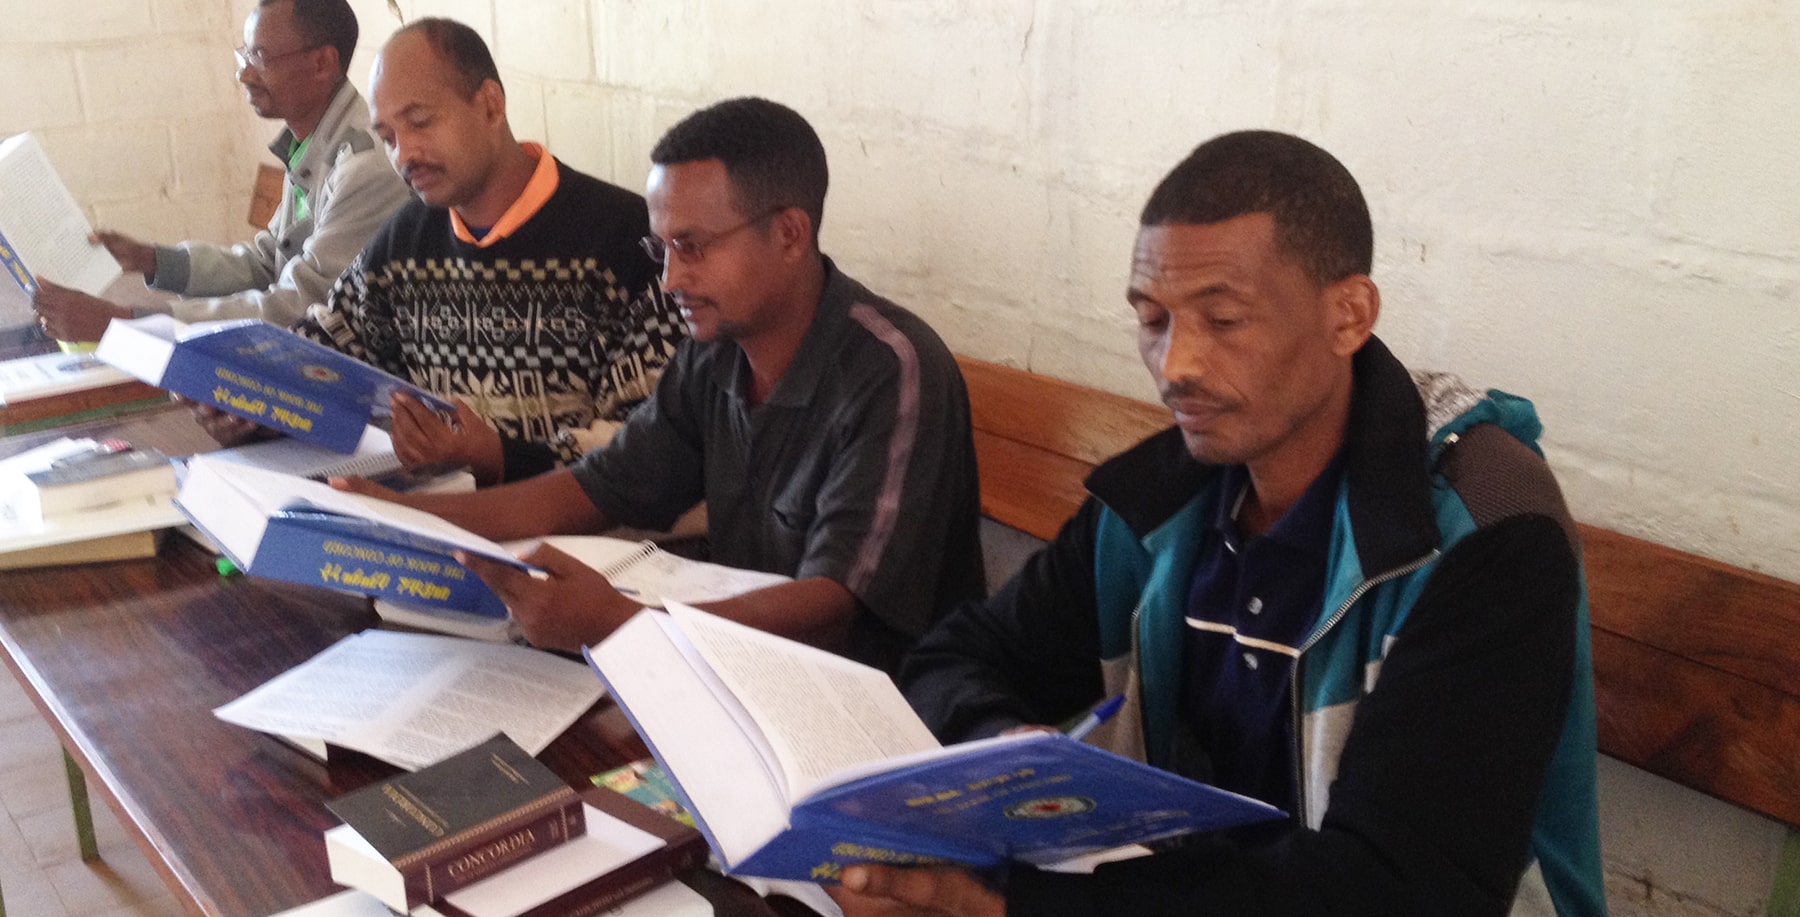 Ethiopia Seminarians Studying Book Of Concord